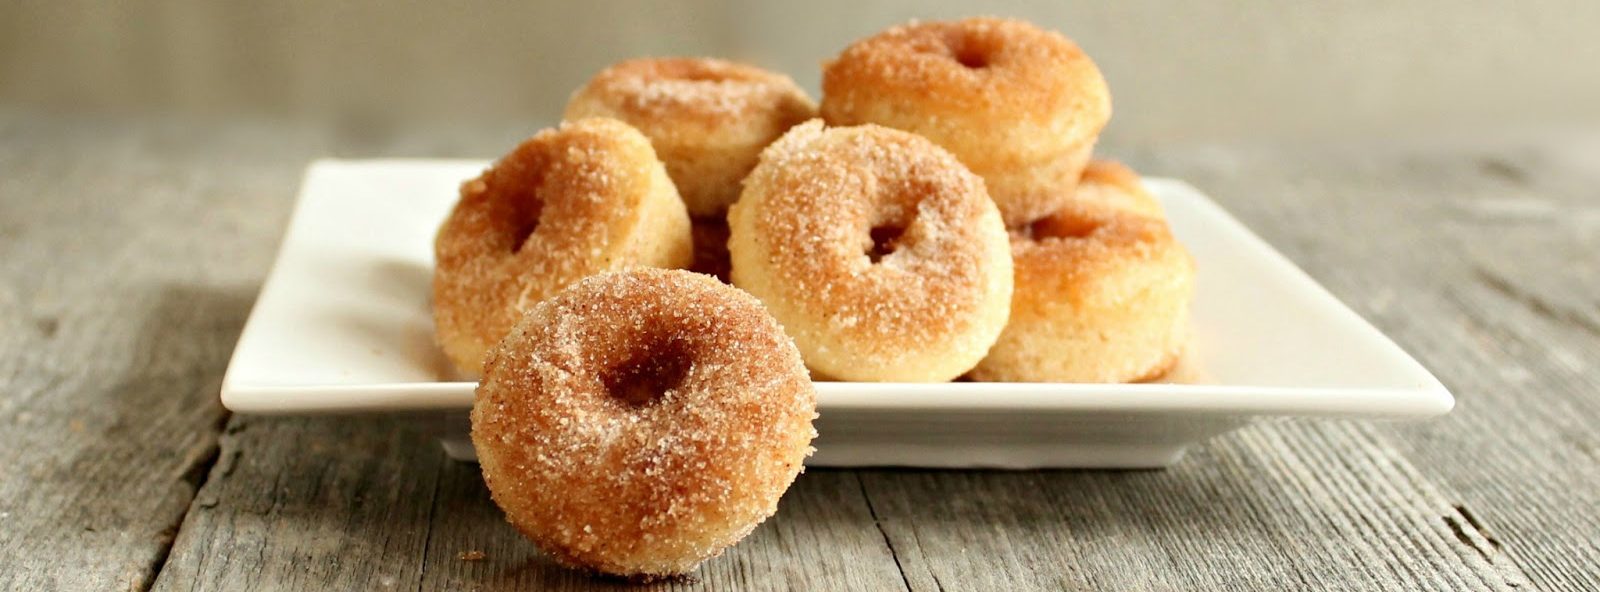 Time to make the doughnuts…